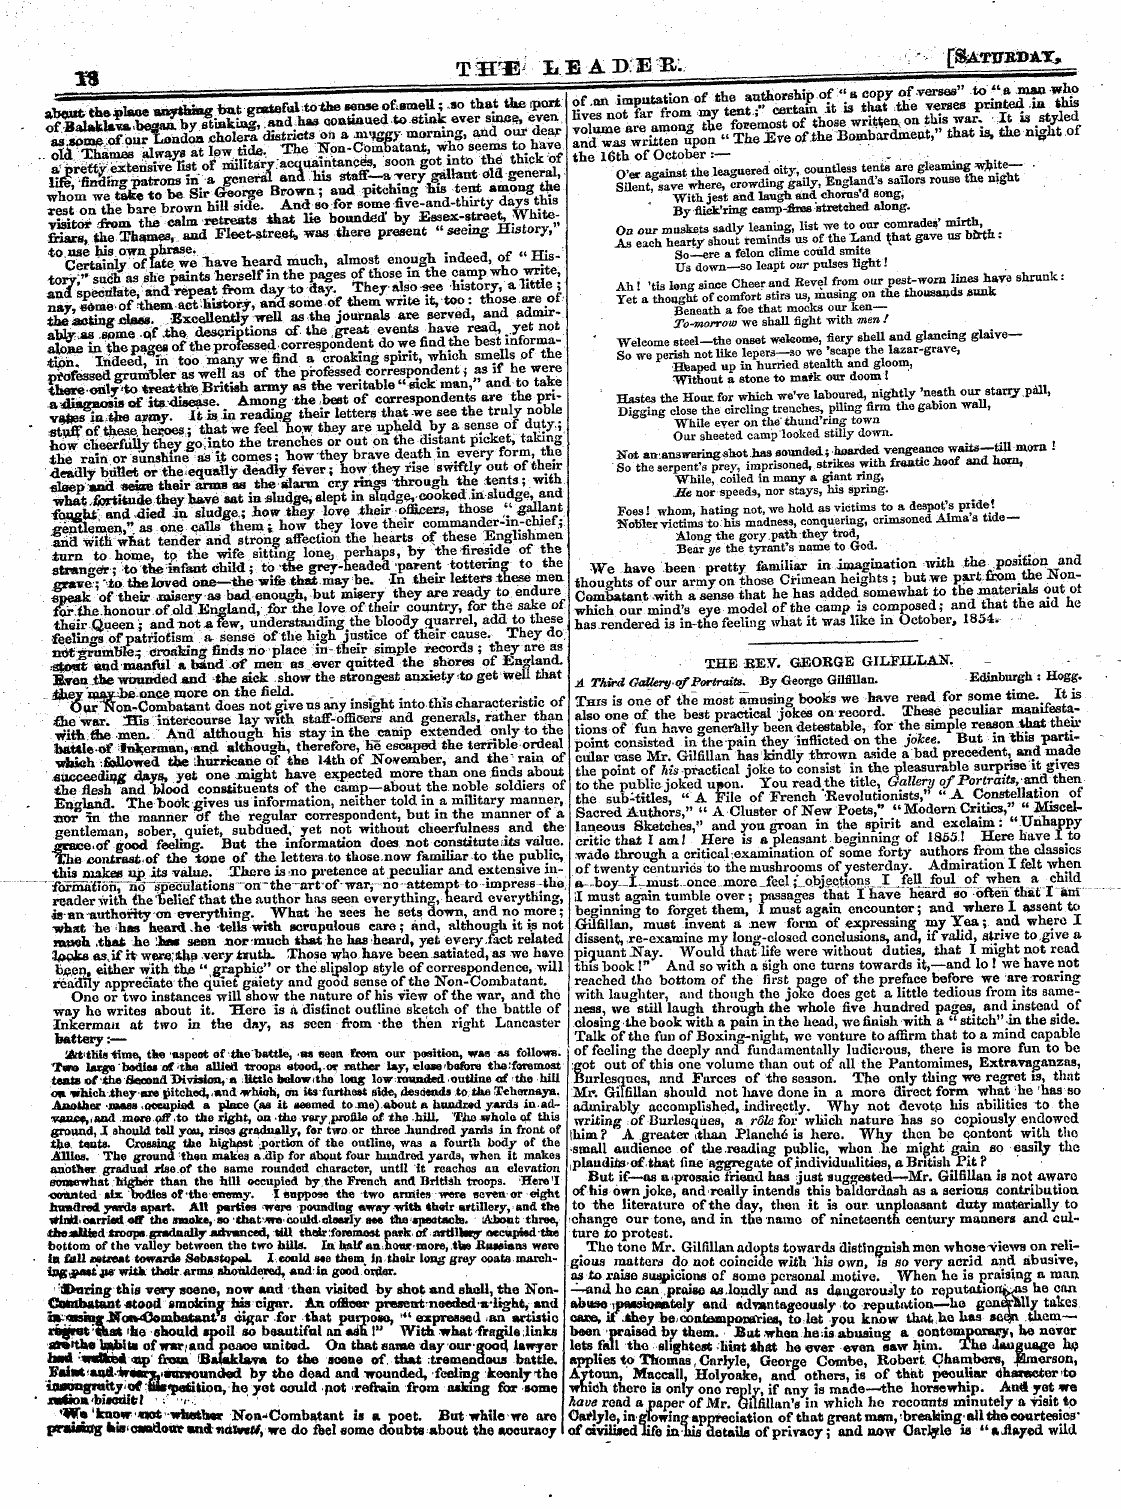 Leader (1850-1860): jS F Y, 2nd edition - The Bey. Geobge Gilpillan. - A Third Gou...